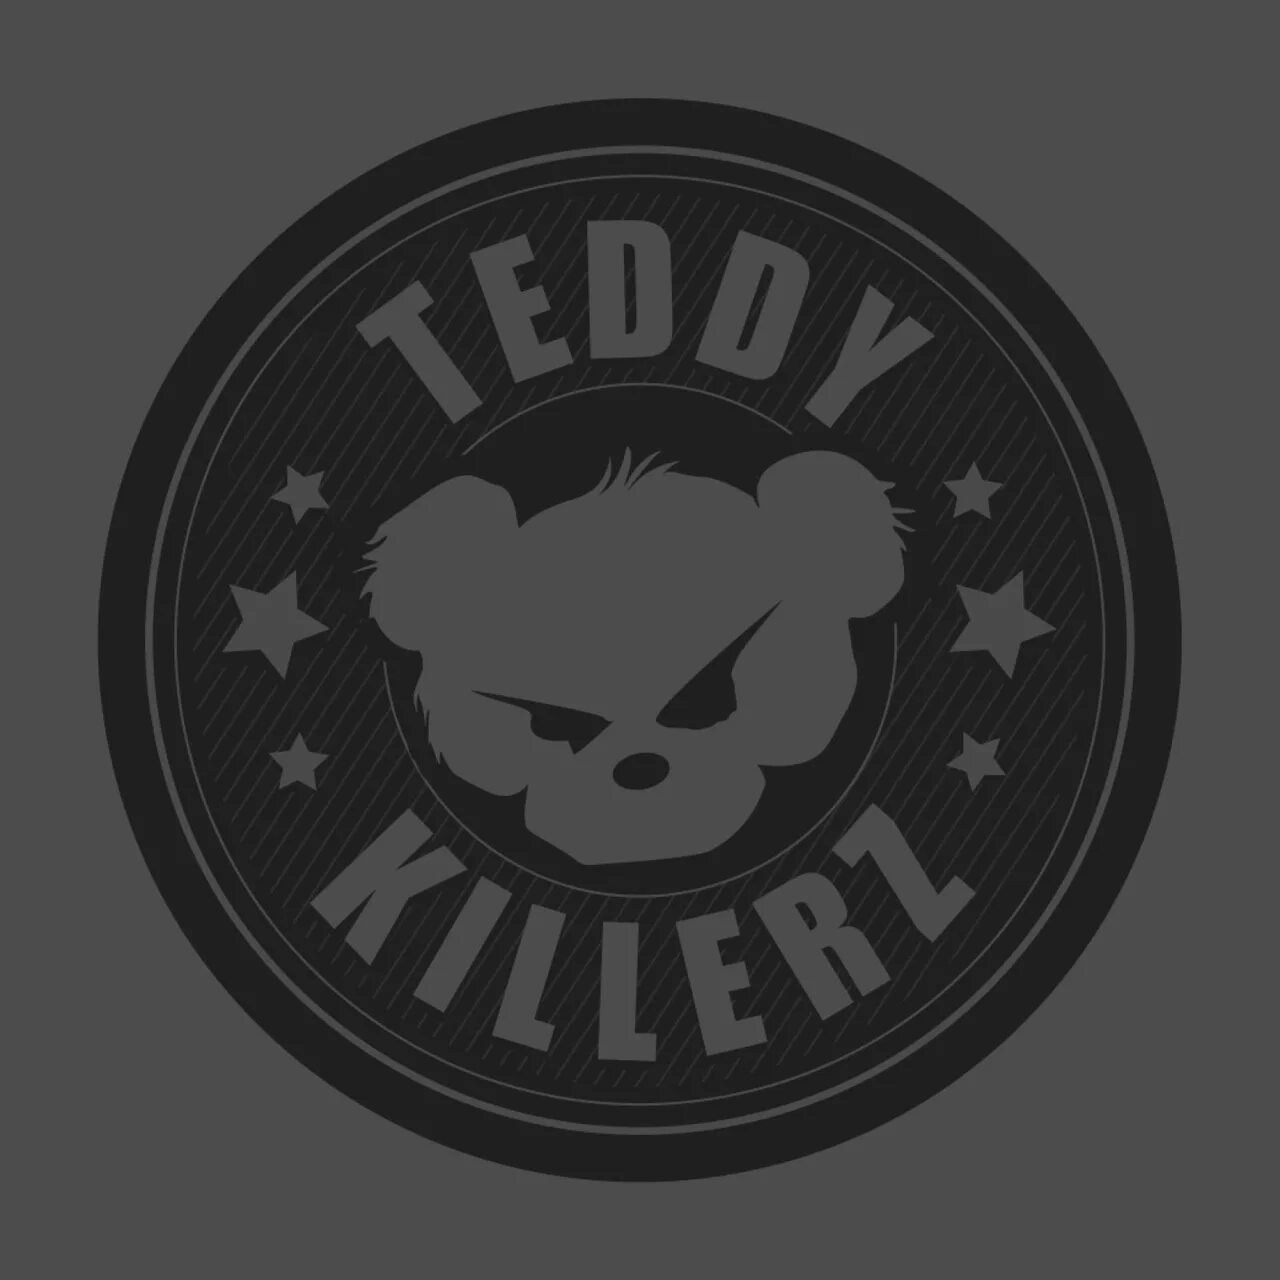 Футболка Teddy Killerz. Teddy Killerz мерч. Teddy Killerz медведь.